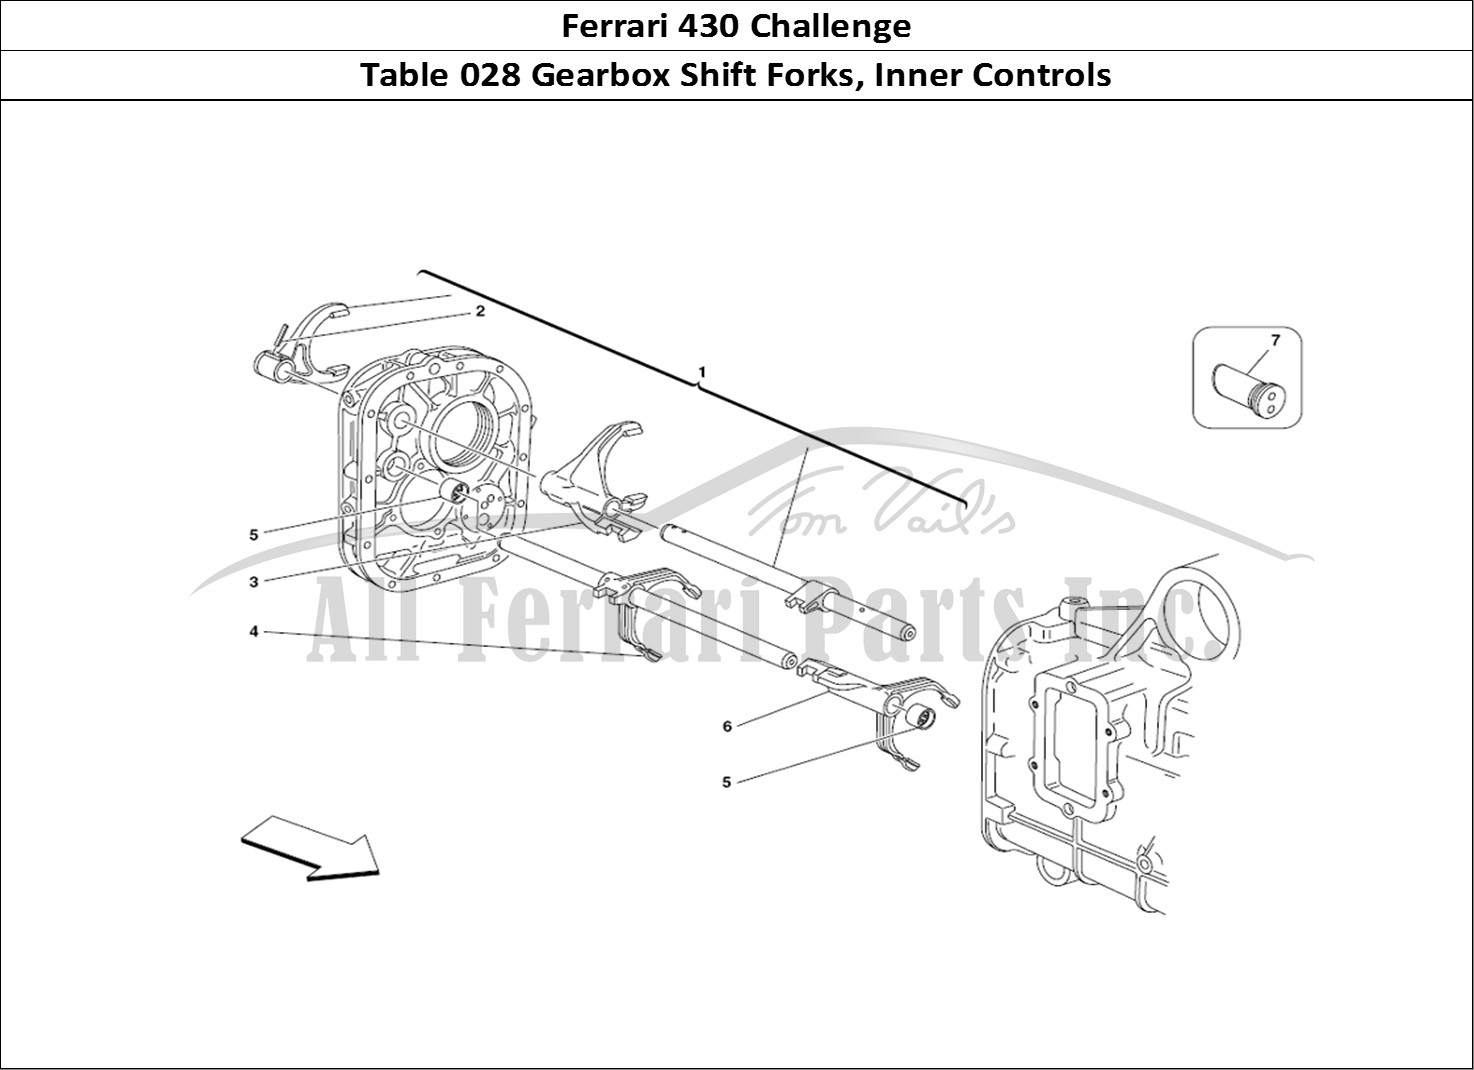 Ferrari Parts Ferrari 430 Challenge (2006) Page 028 Inside Gearbox Controls